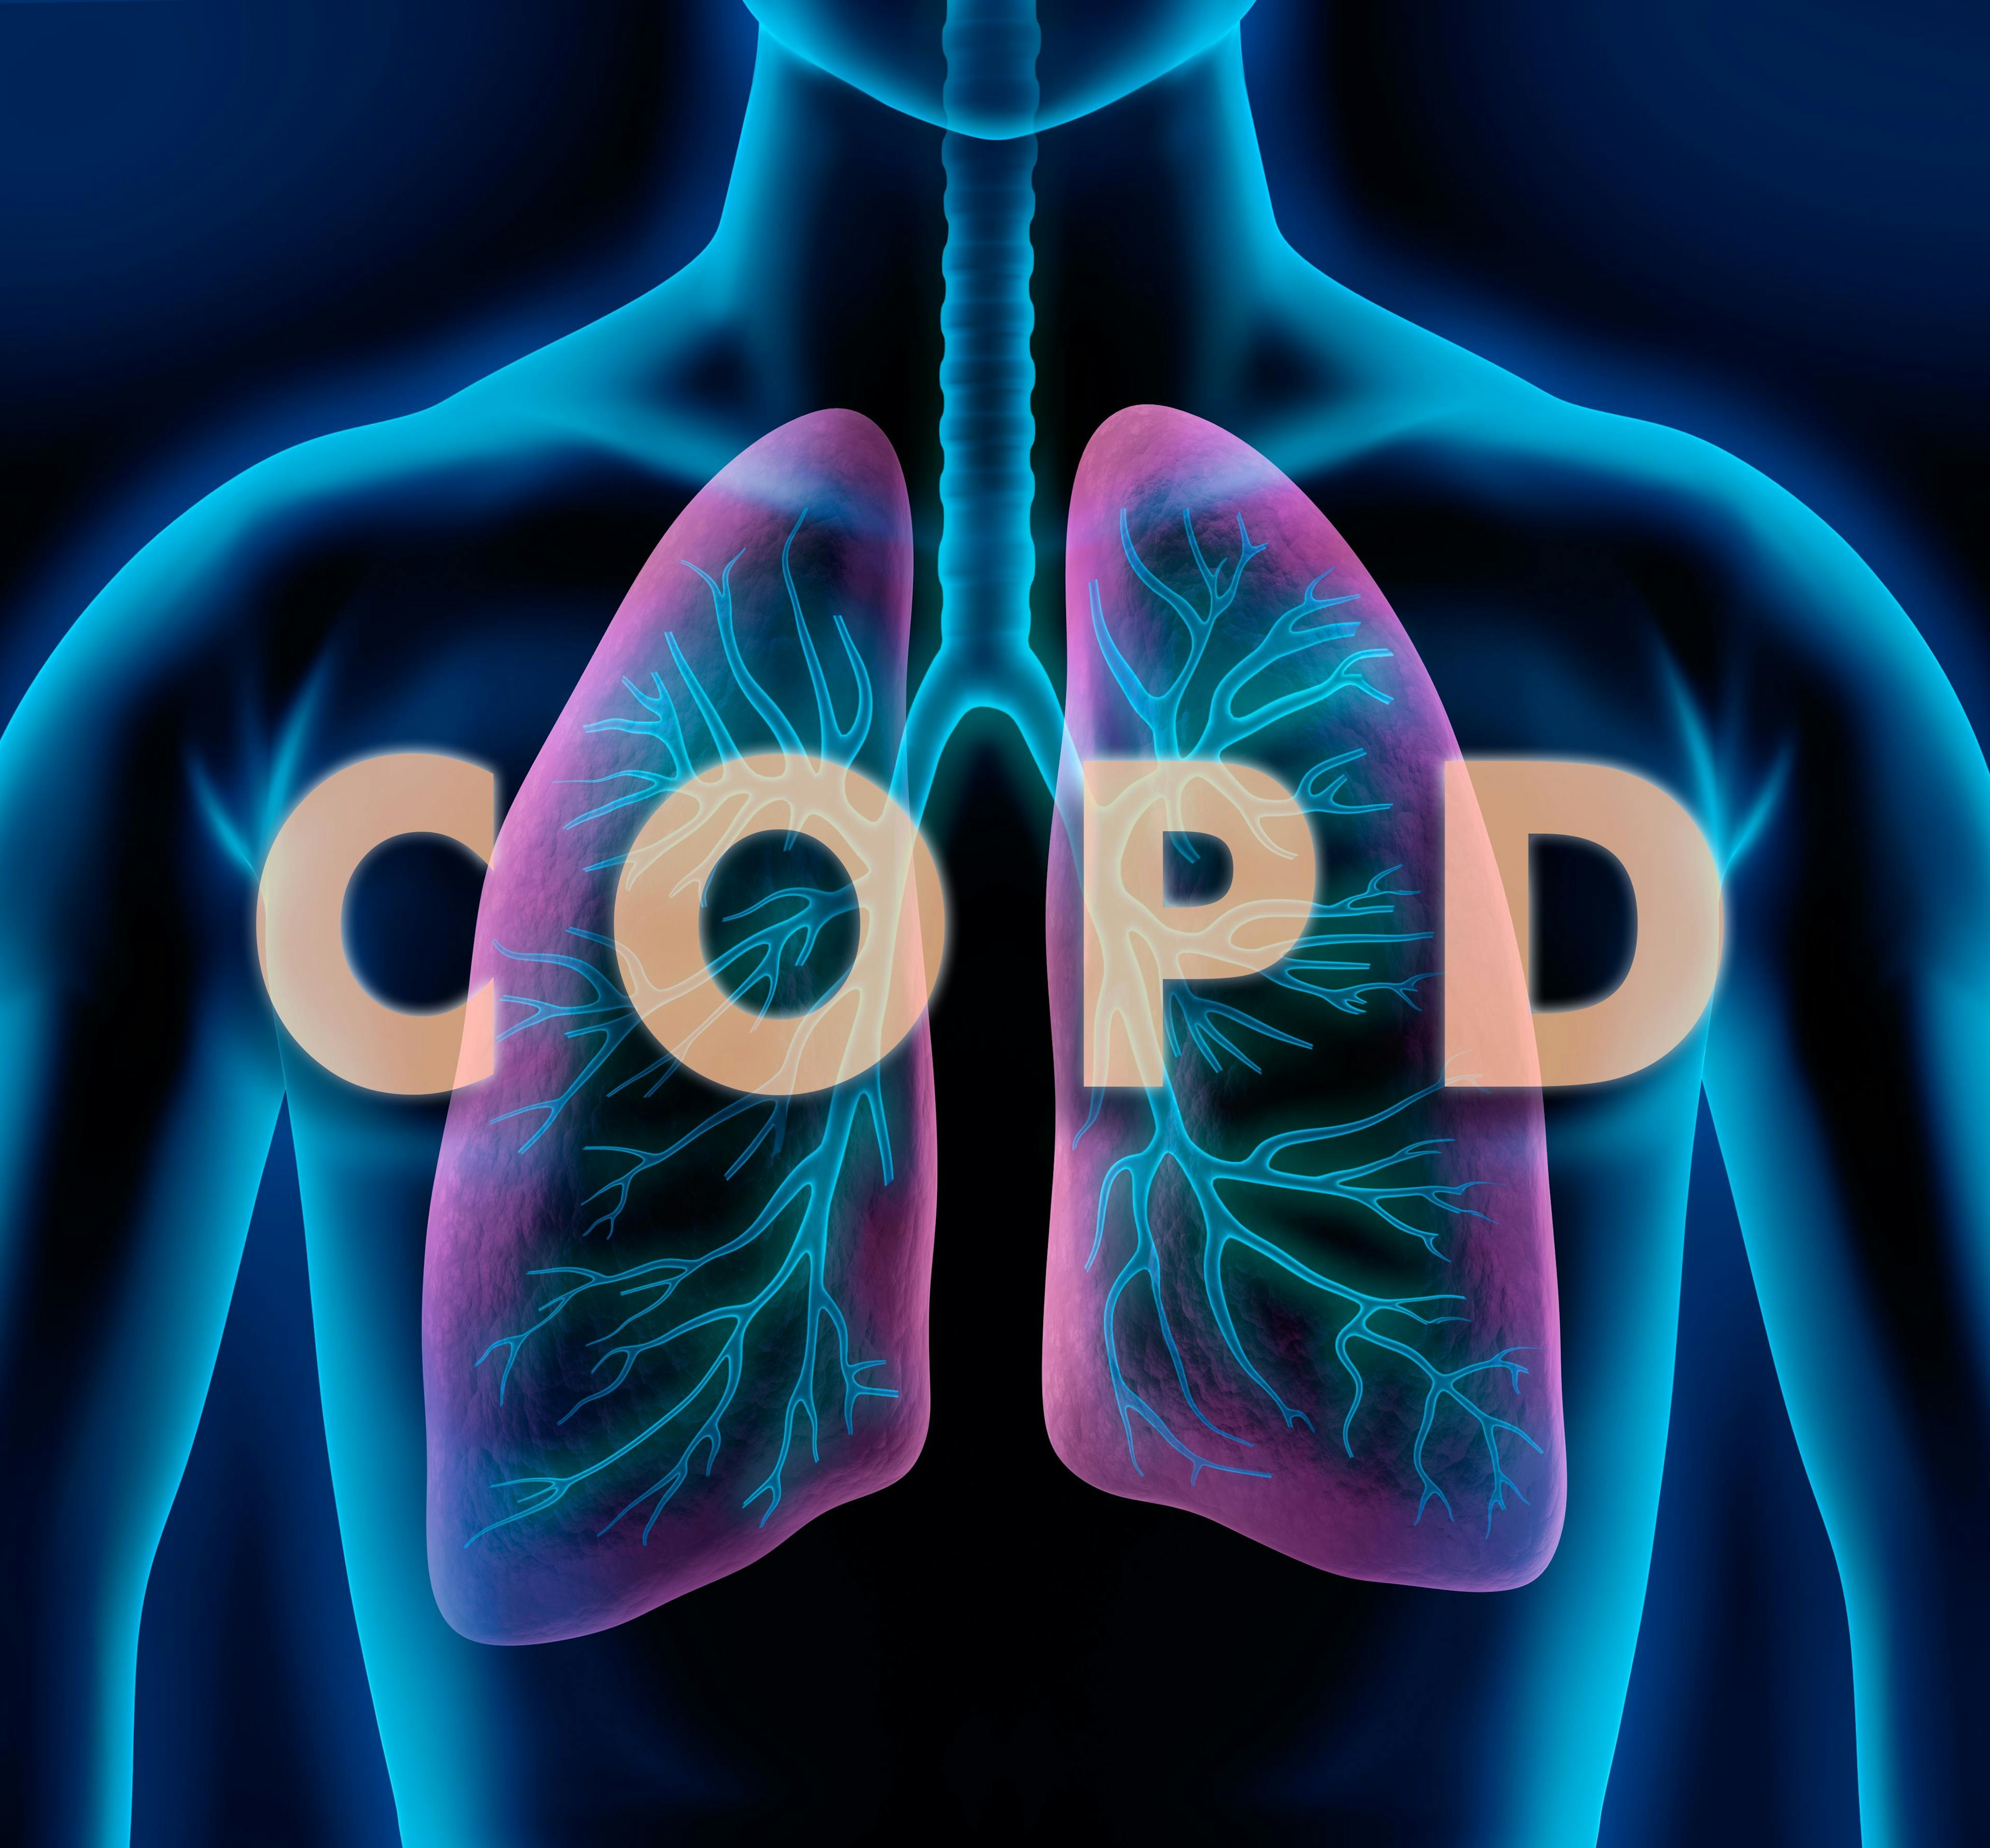 COPD Rehabilitation App Improves At-Home Outcomes Following Inpatient Rehabilitation